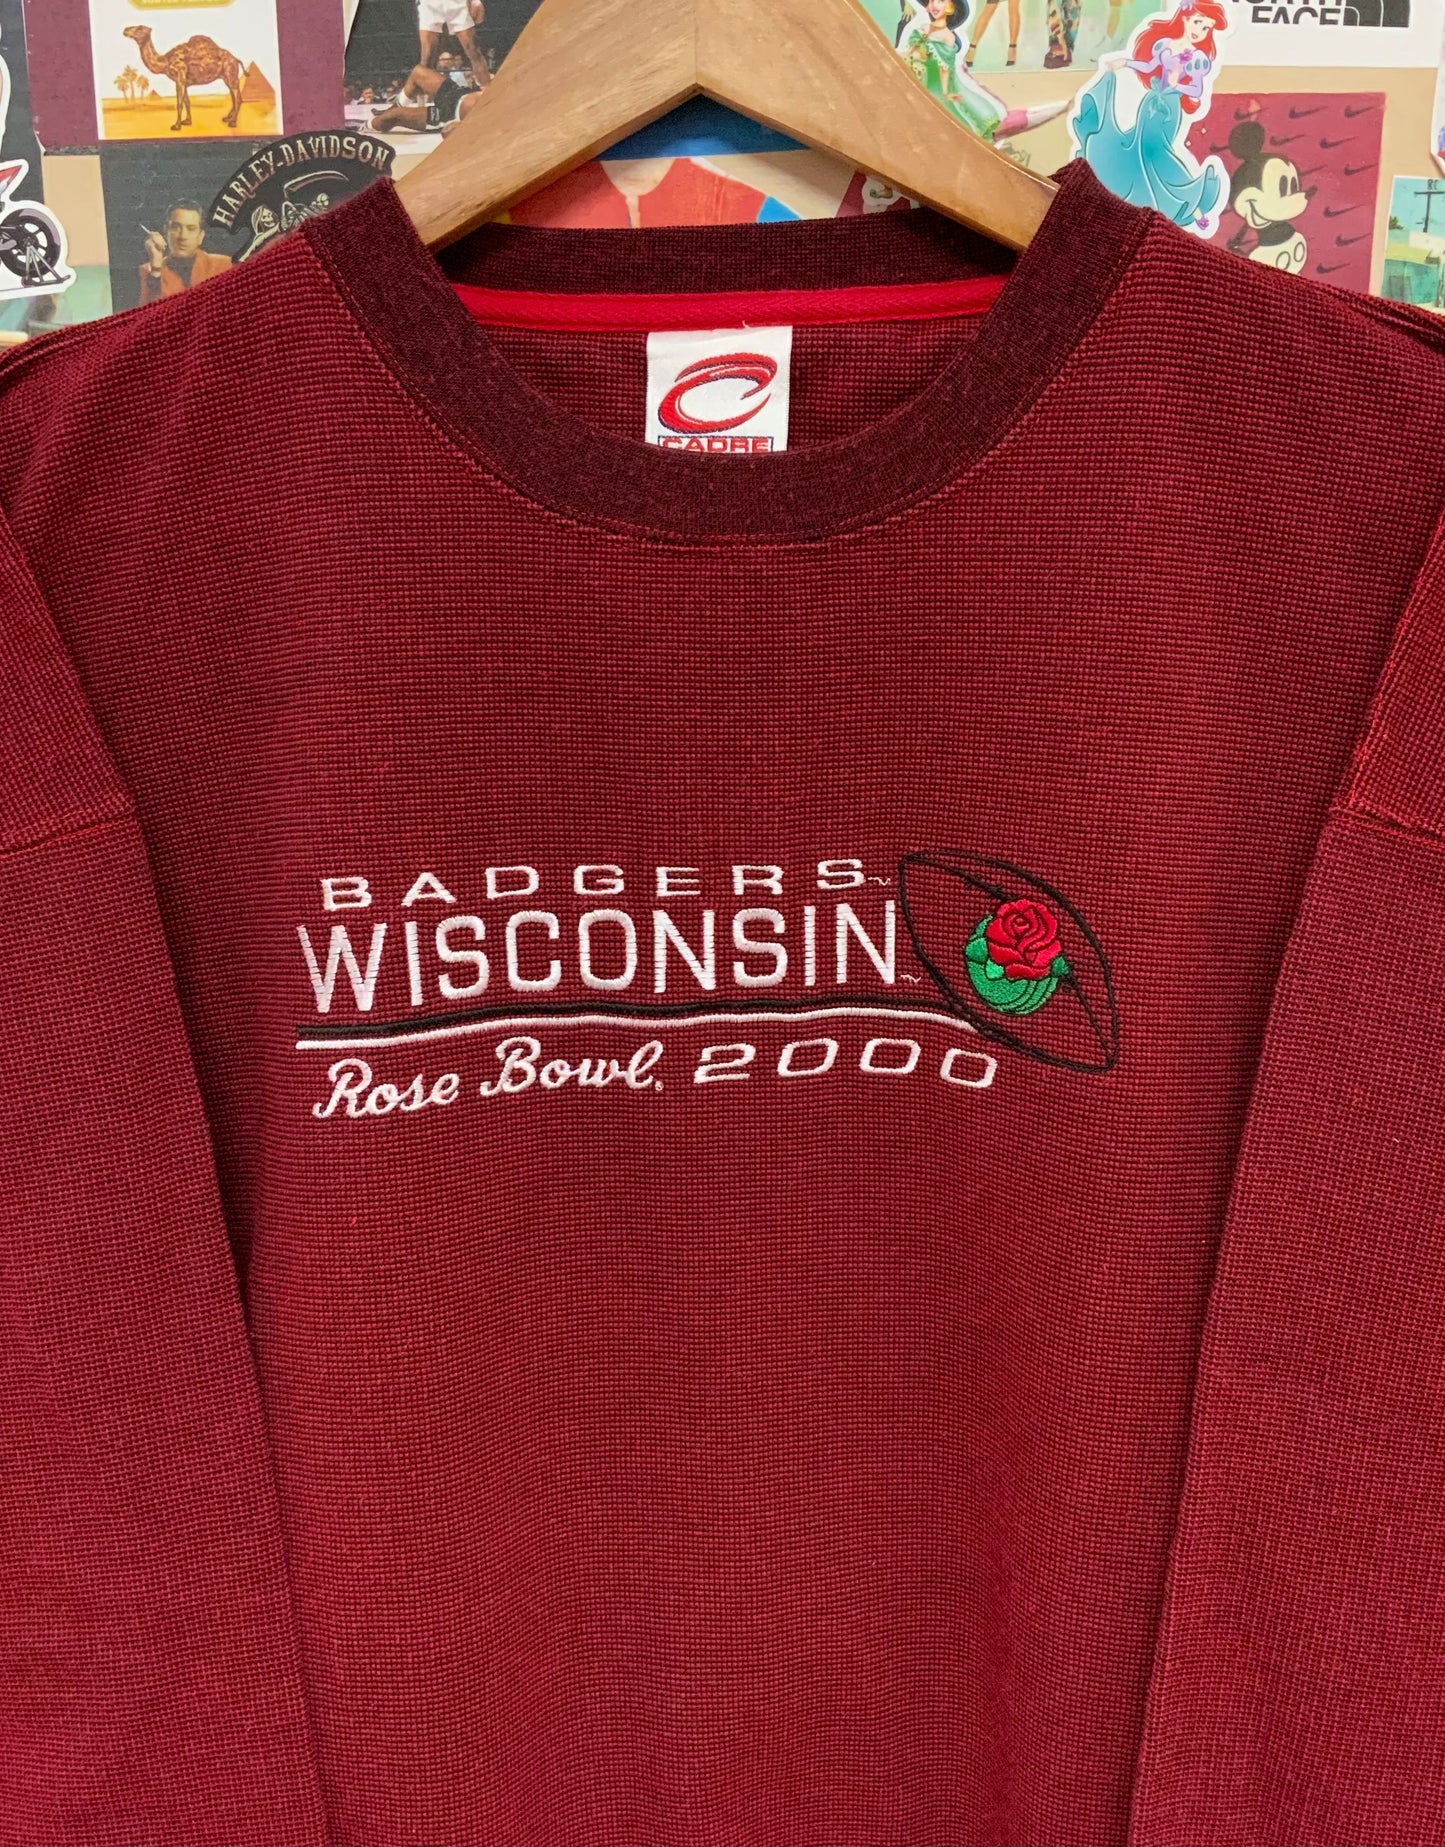 Wisconsin Badgers Vintage Sweater / bestickt / XL